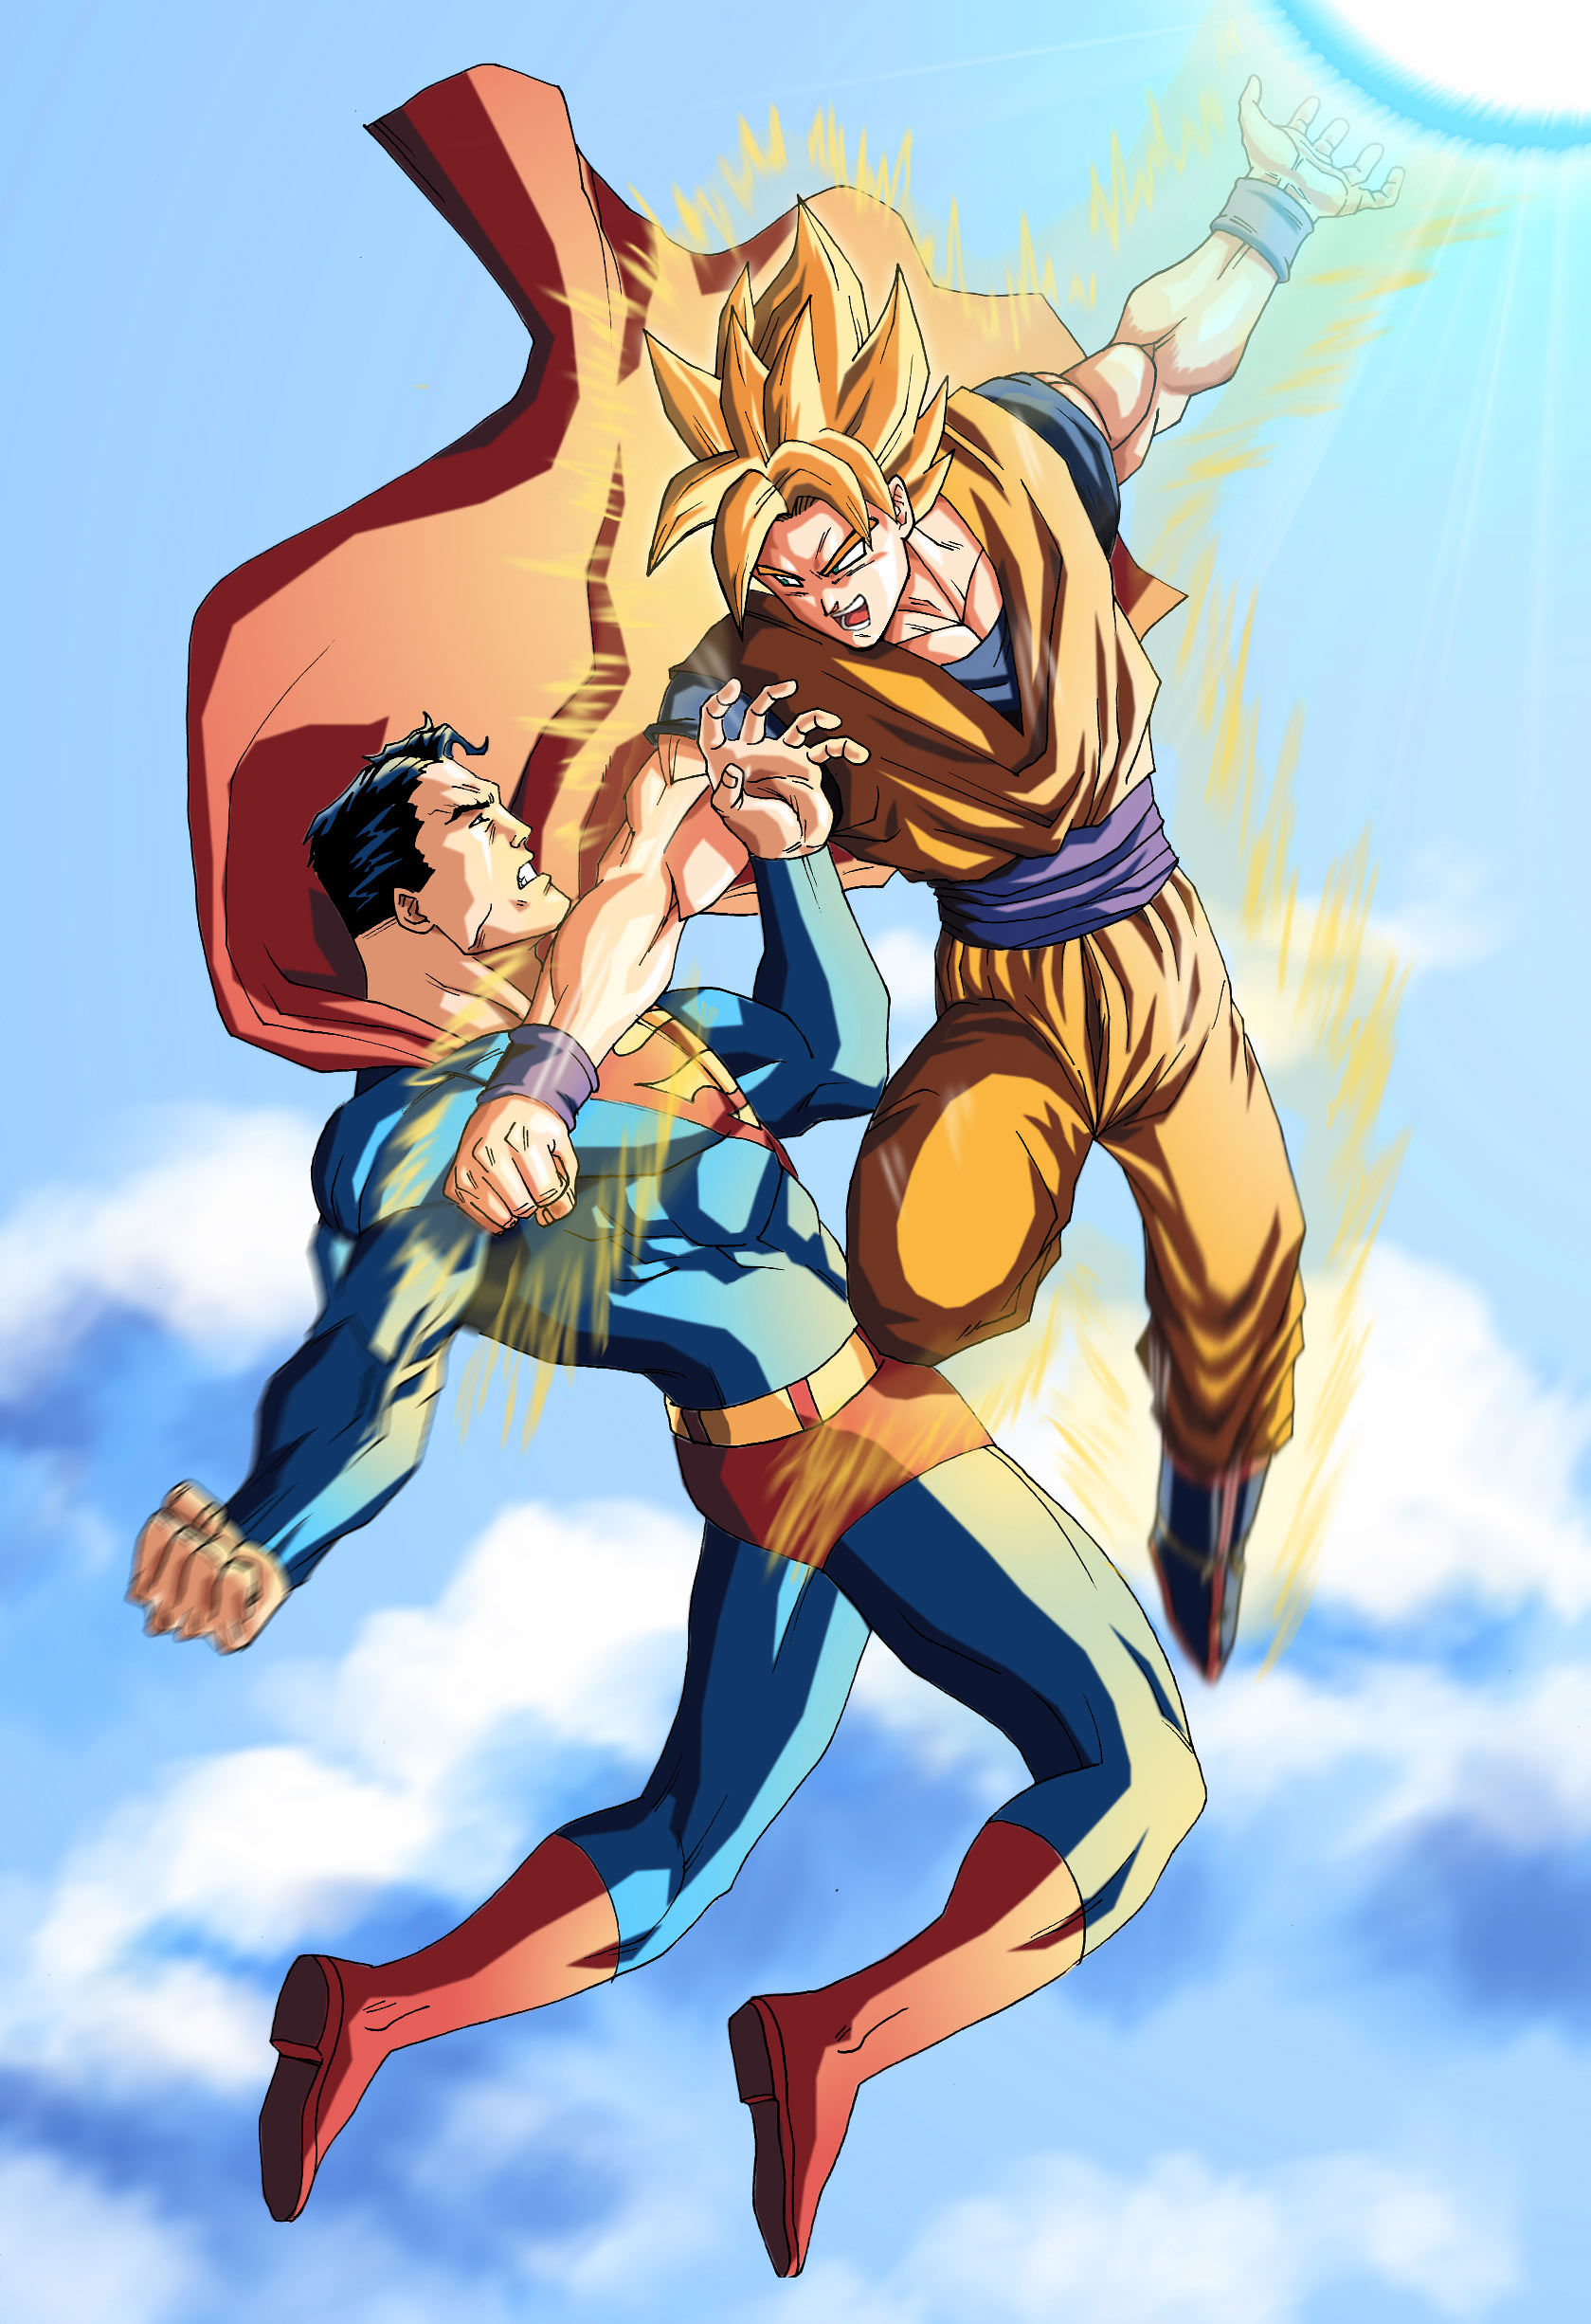 Load 15 More Imagesgrid View - Super Man Vs Goku , HD Wallpaper & Backgrounds